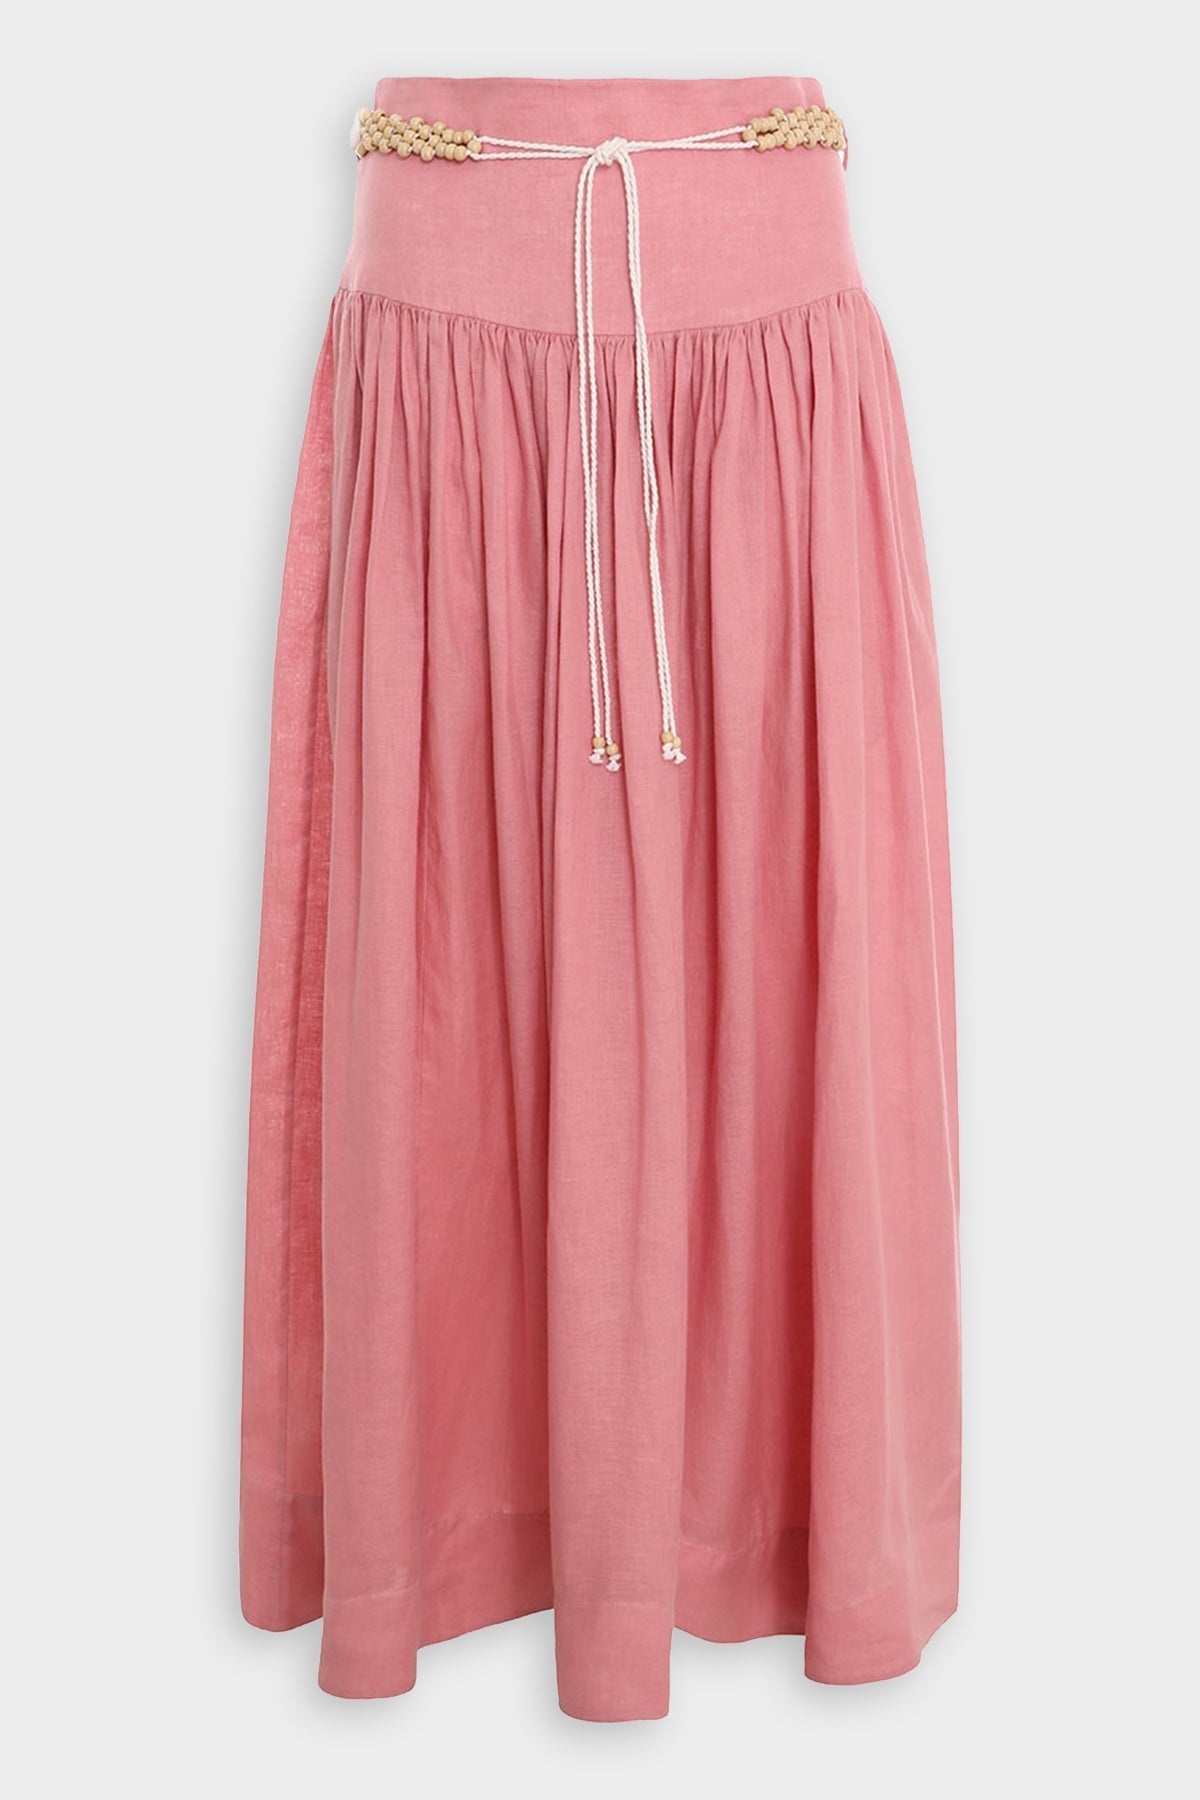 Jeannie Basque Waist Skirt in Rose - shop-olivia.com